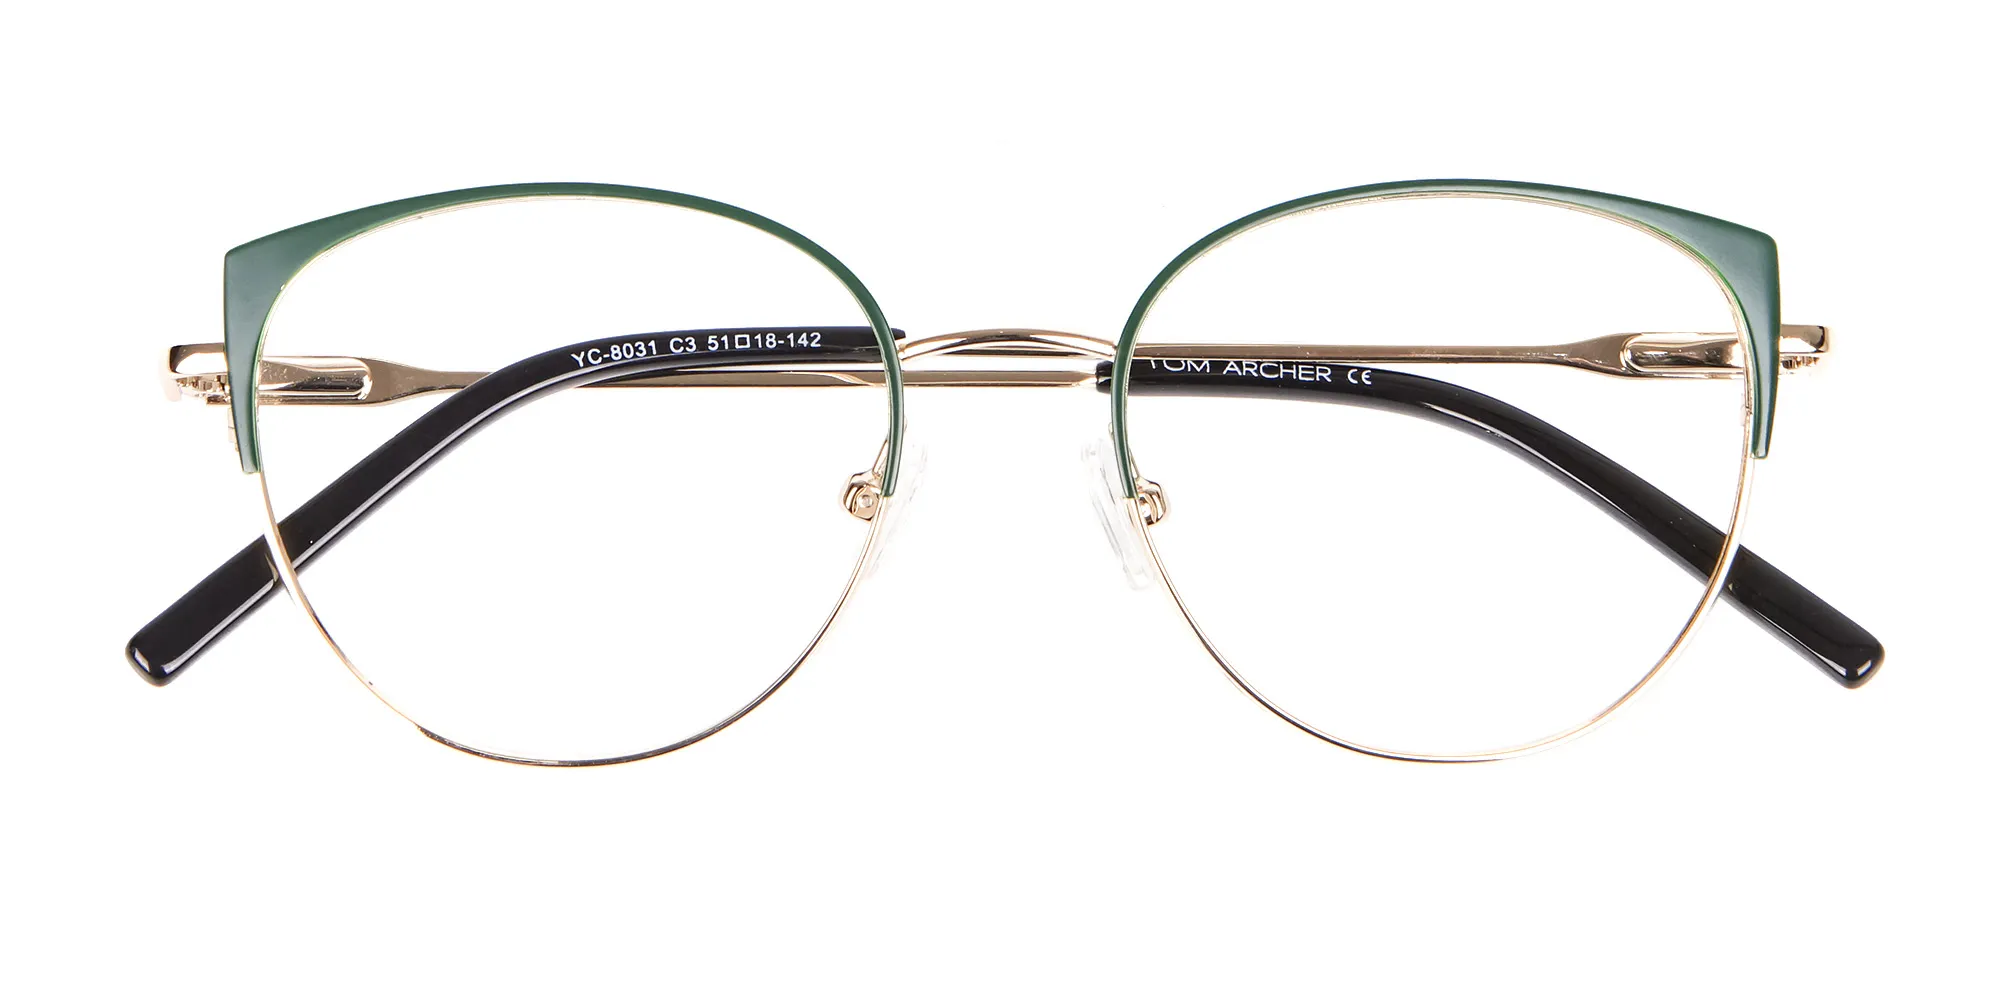 Vintage Inspired Glasses Green and Metal Frame - 2